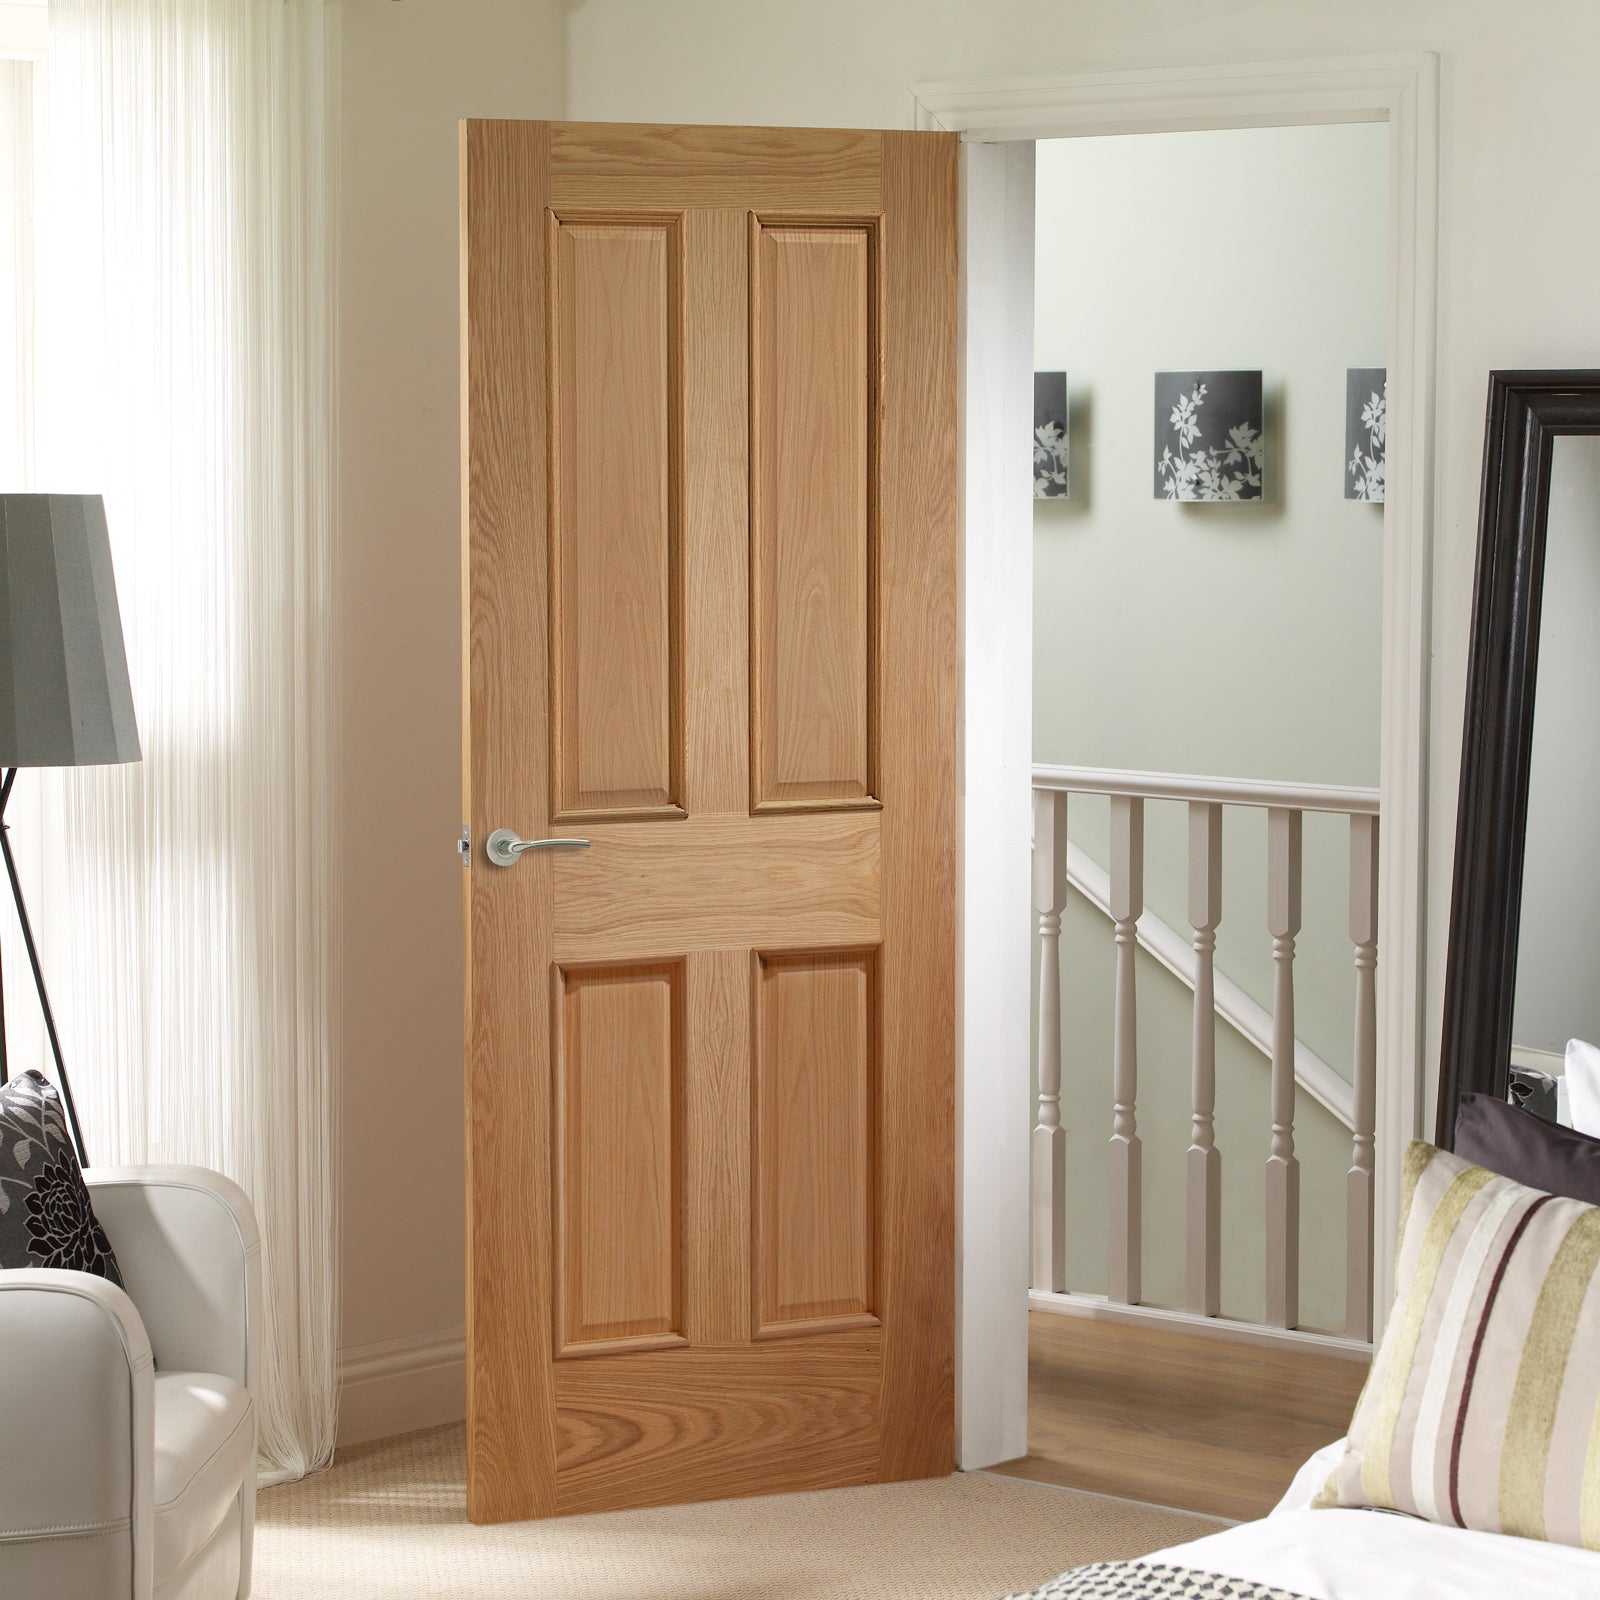 SHOW Internal Oak Victorian Door with Raised Mouldings lifestyle